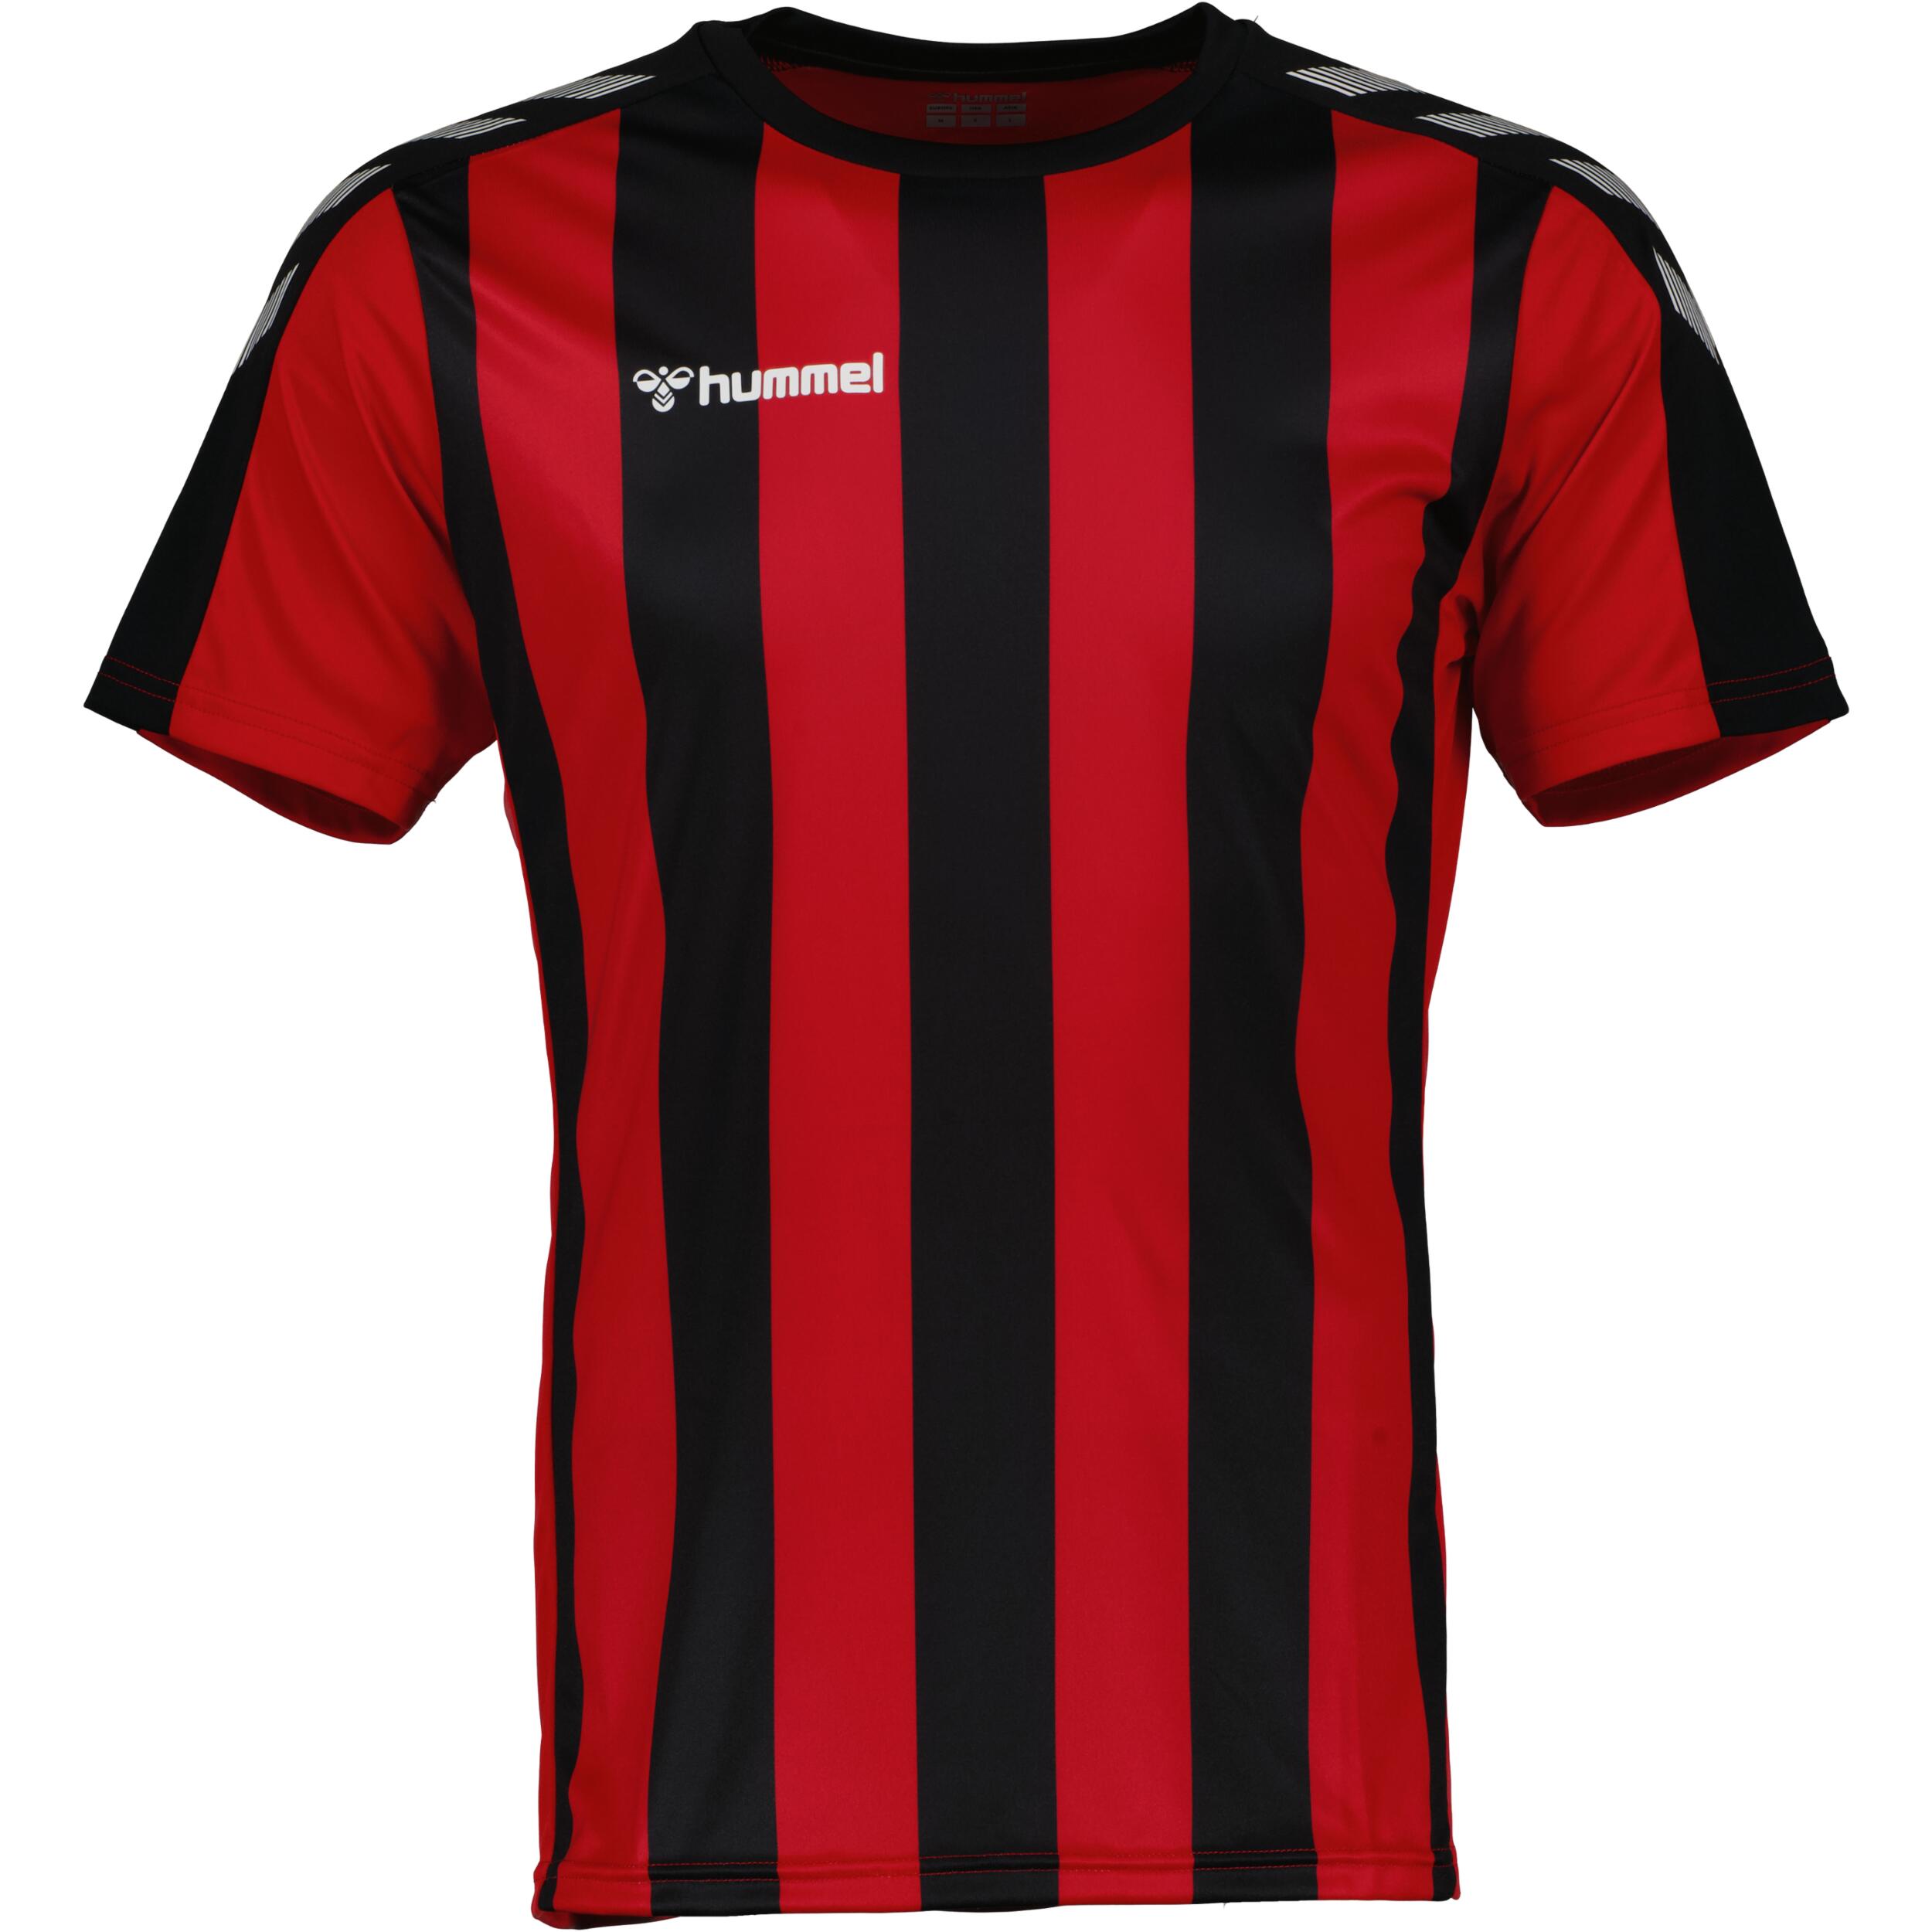 HUMMEL Stripe jersey for kids, great for football, in true red/black